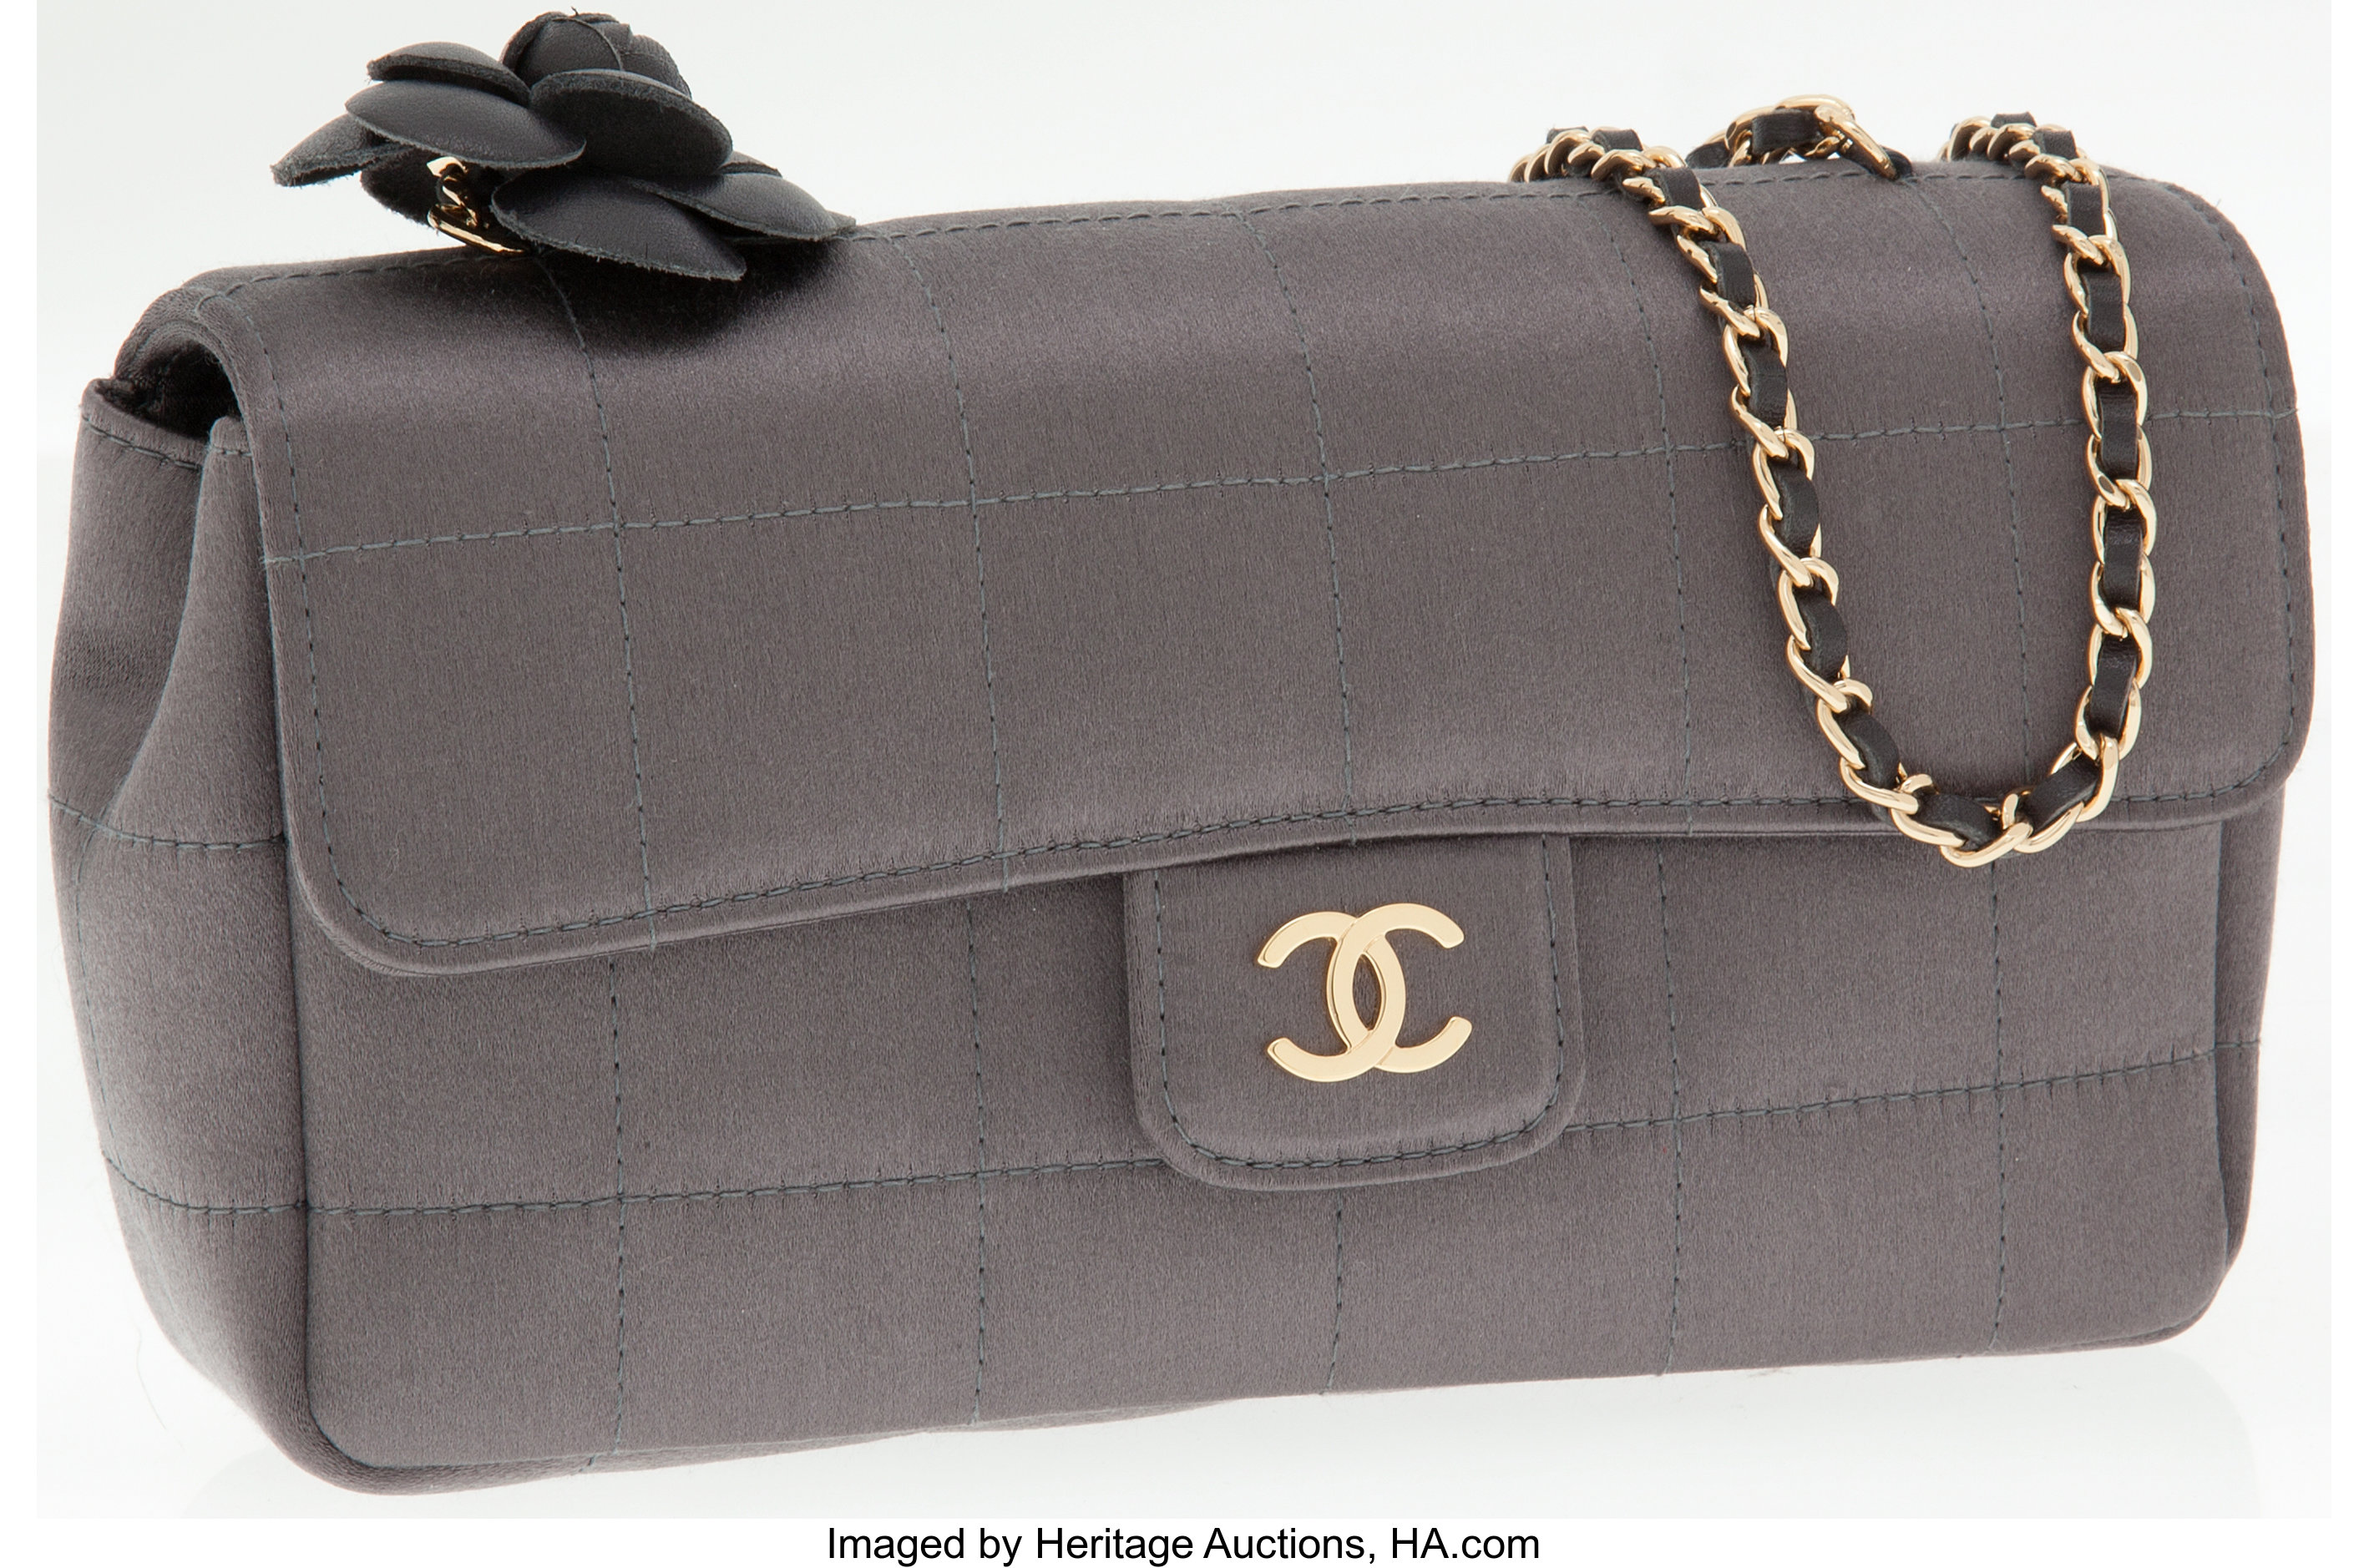 Rare NEW Mini Pewter Chanel Crossbody Handbag